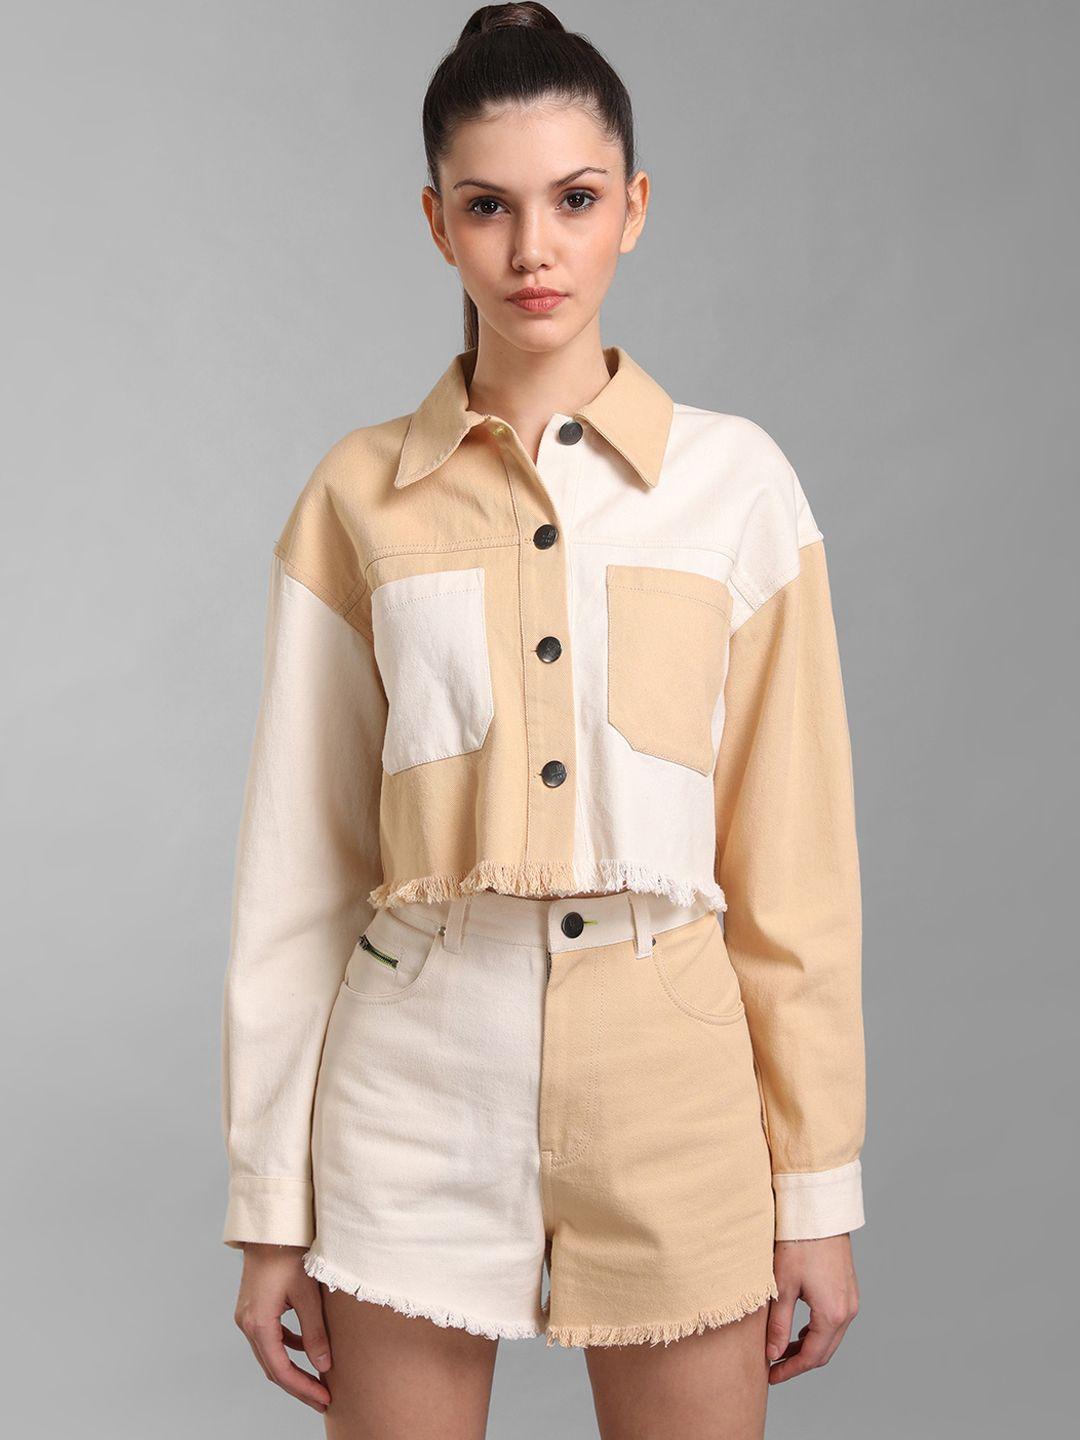 kz07 by kazo women beige white colourblocked cotton crop tailored jacket